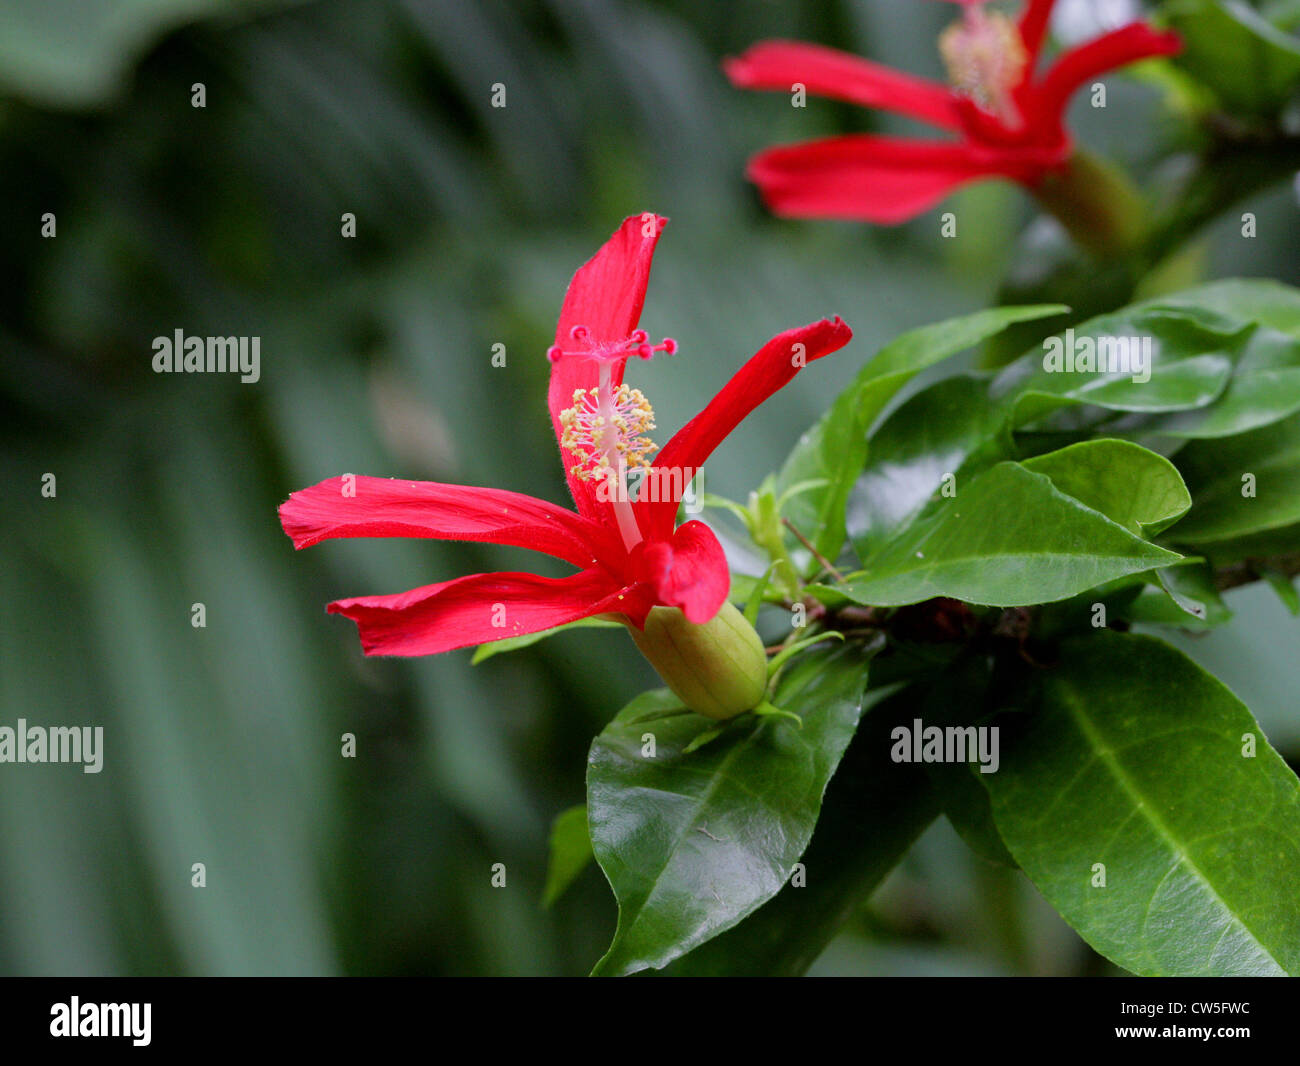 Clays Hibiskus, rot Kauai Rosemallow Hibiscus Clayi, Malvaceae. Hawaii. Vom Aussterben bedrohte Pflanzenarten. Stockfoto